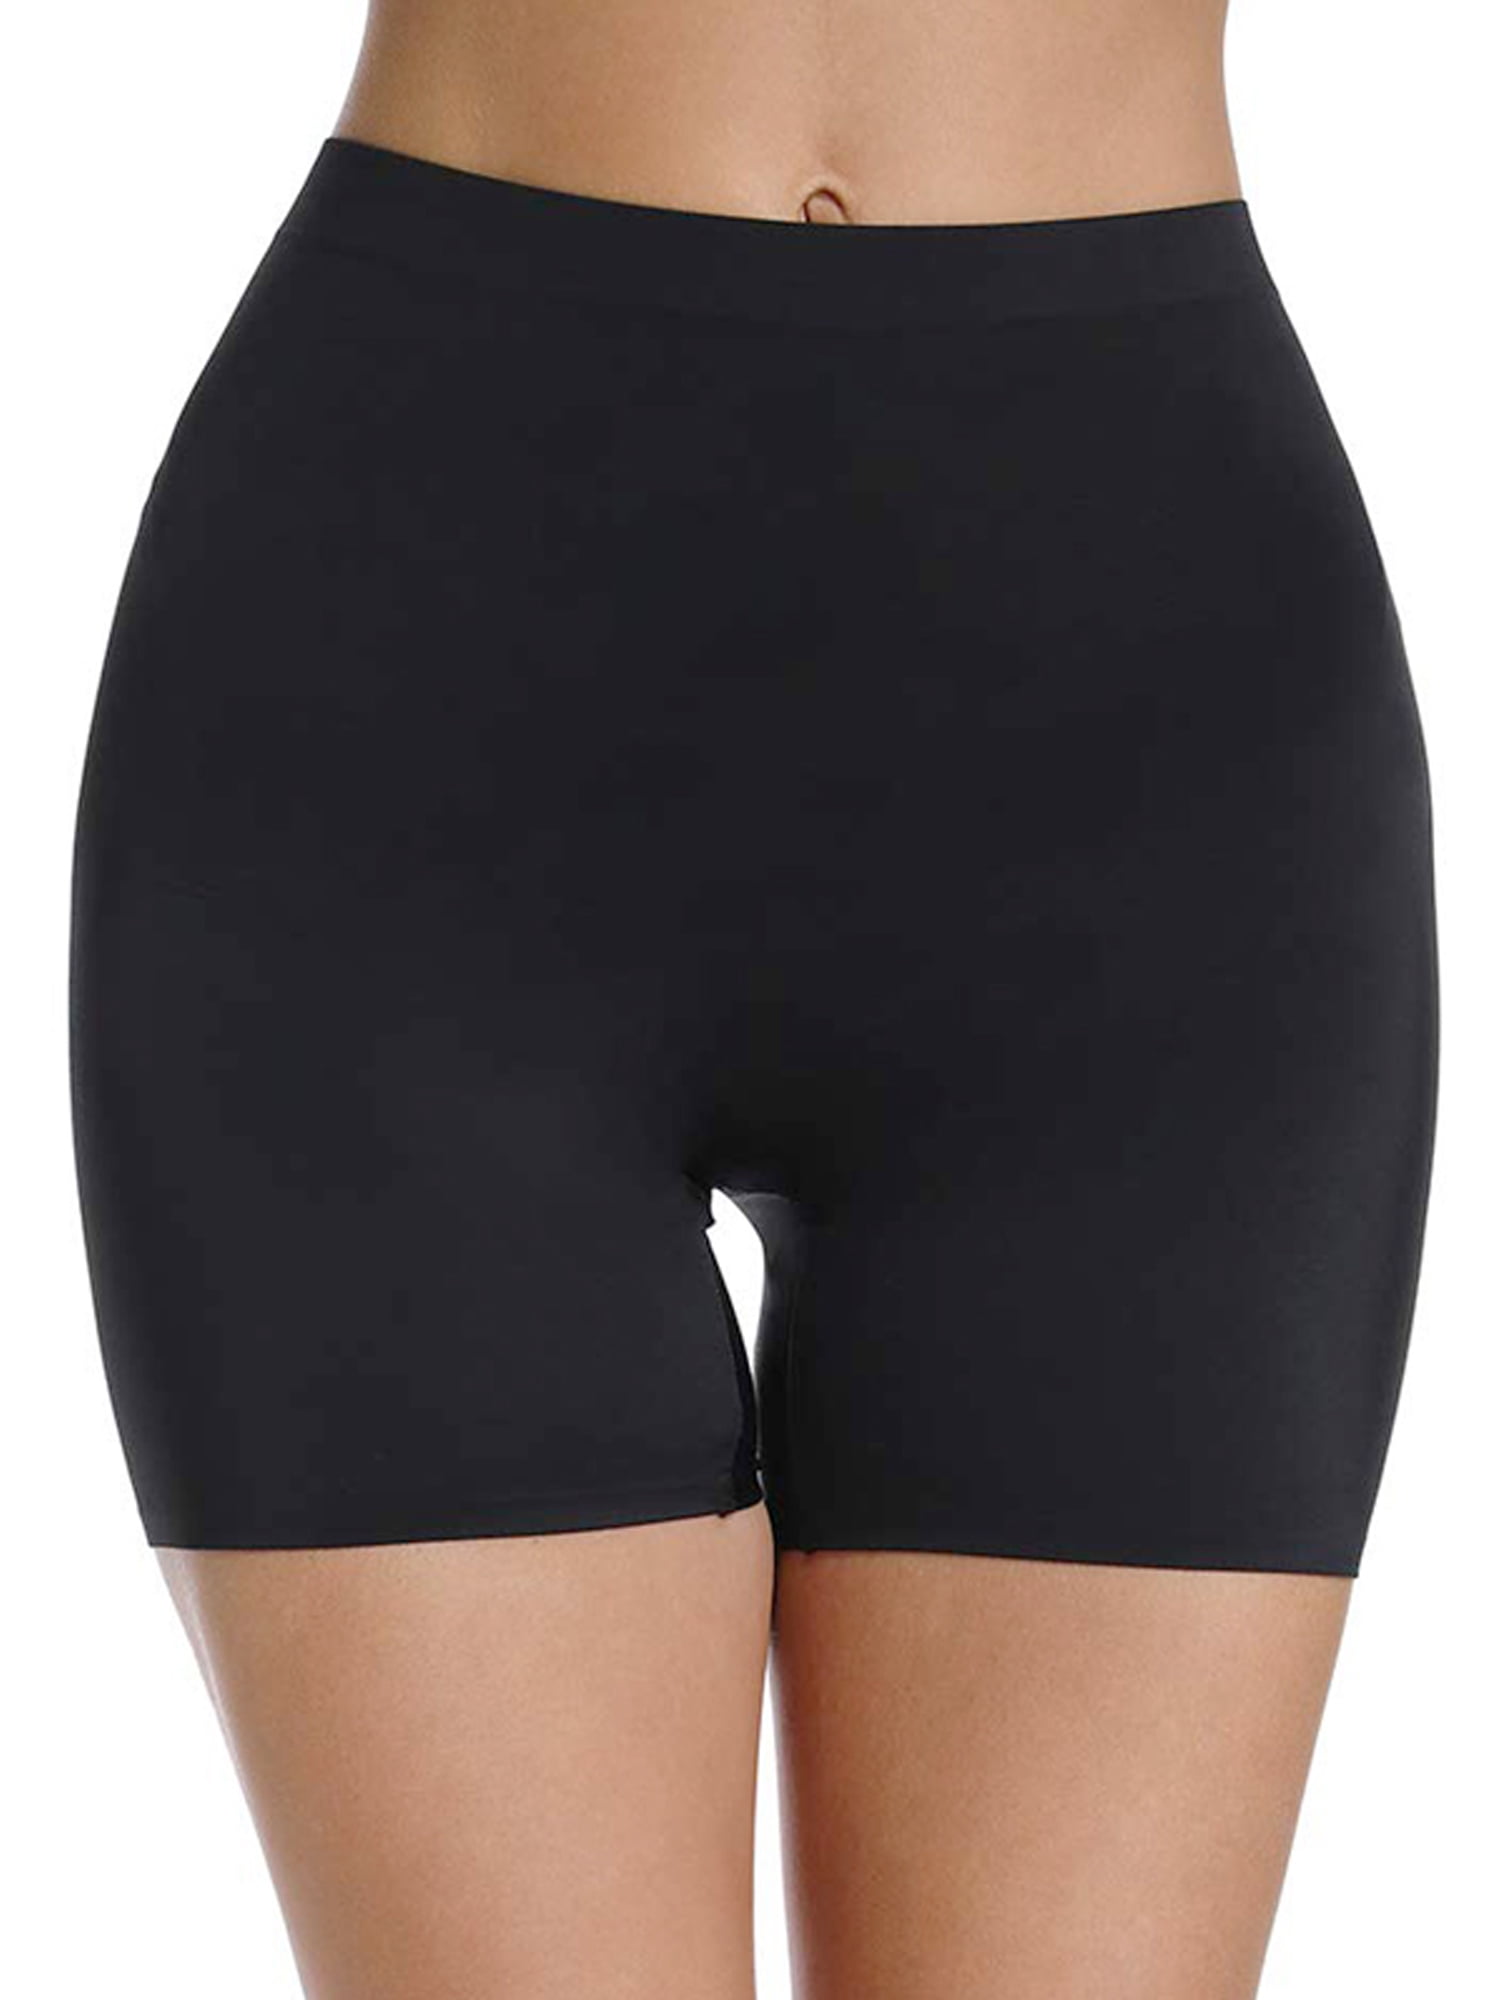 Anti Chafing Slip Shorts for Women Under Dress Thigh Slimmer Boyshorts Panties Seamless Underwear 